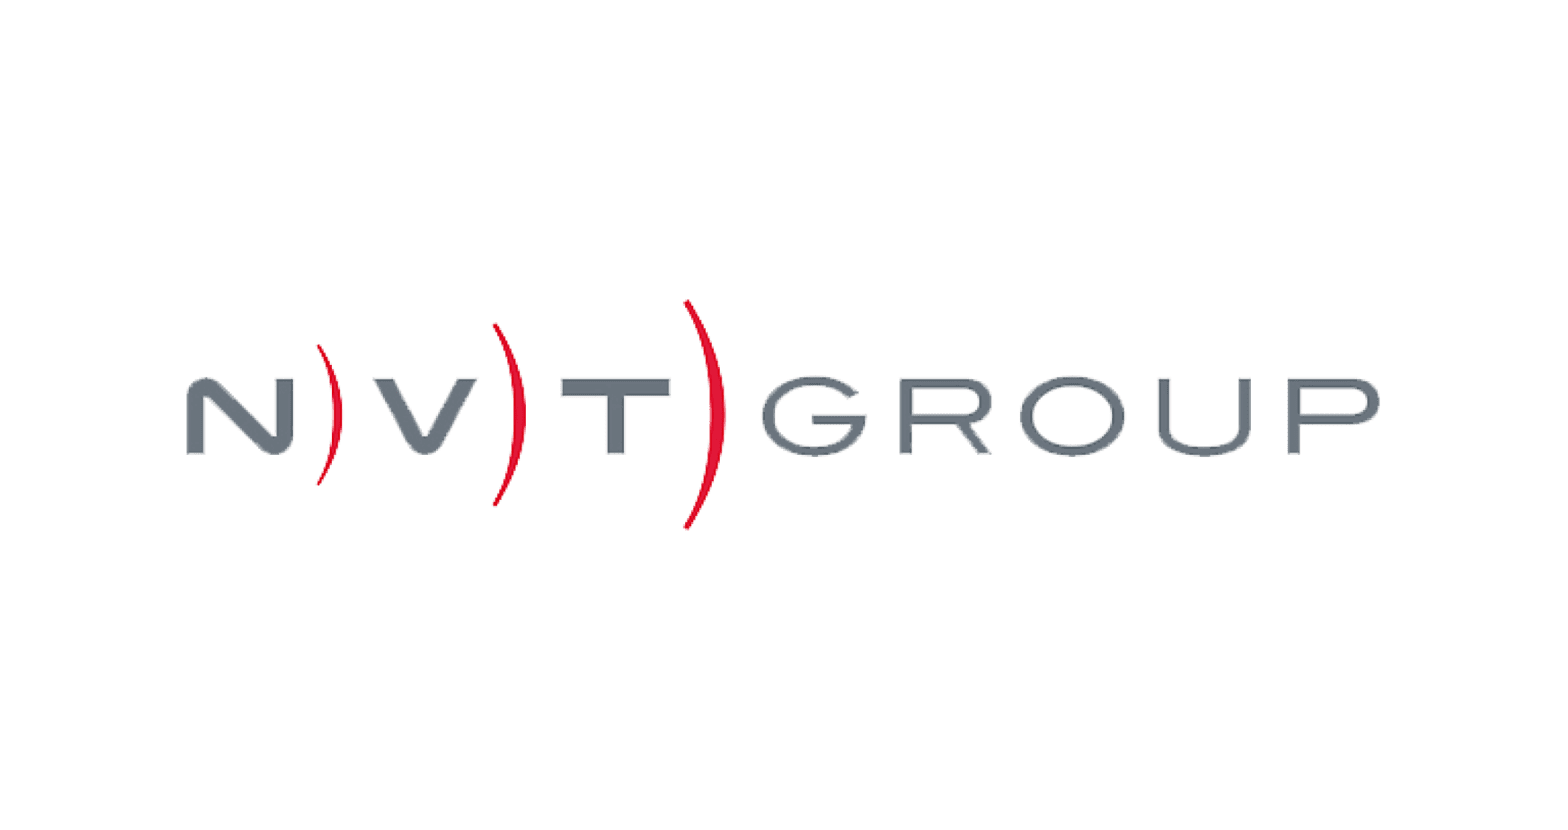 NVT Group